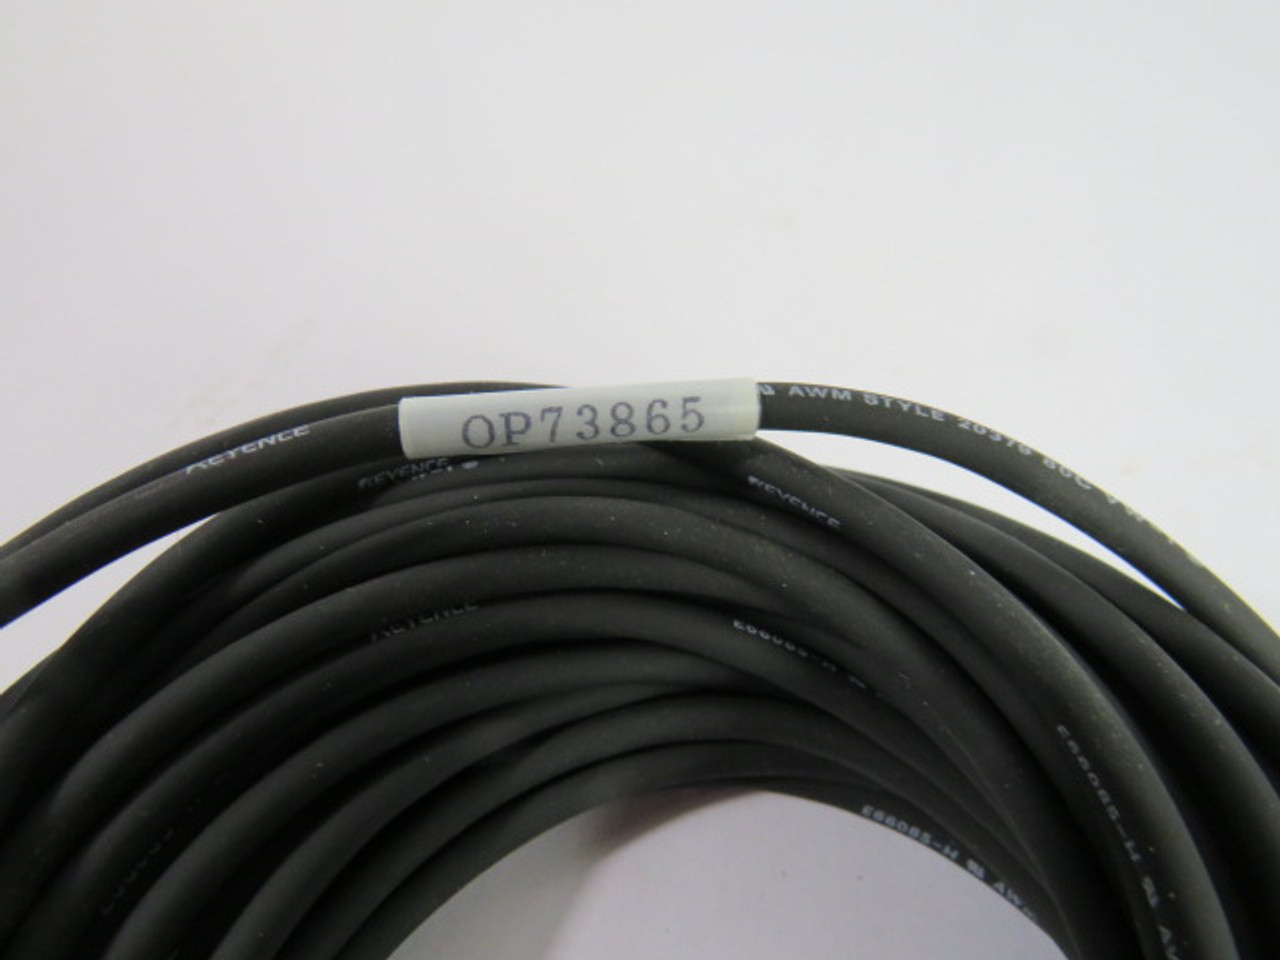 Keyence OP 73865 Fiber Optic Cable 10m Length ! NEW !